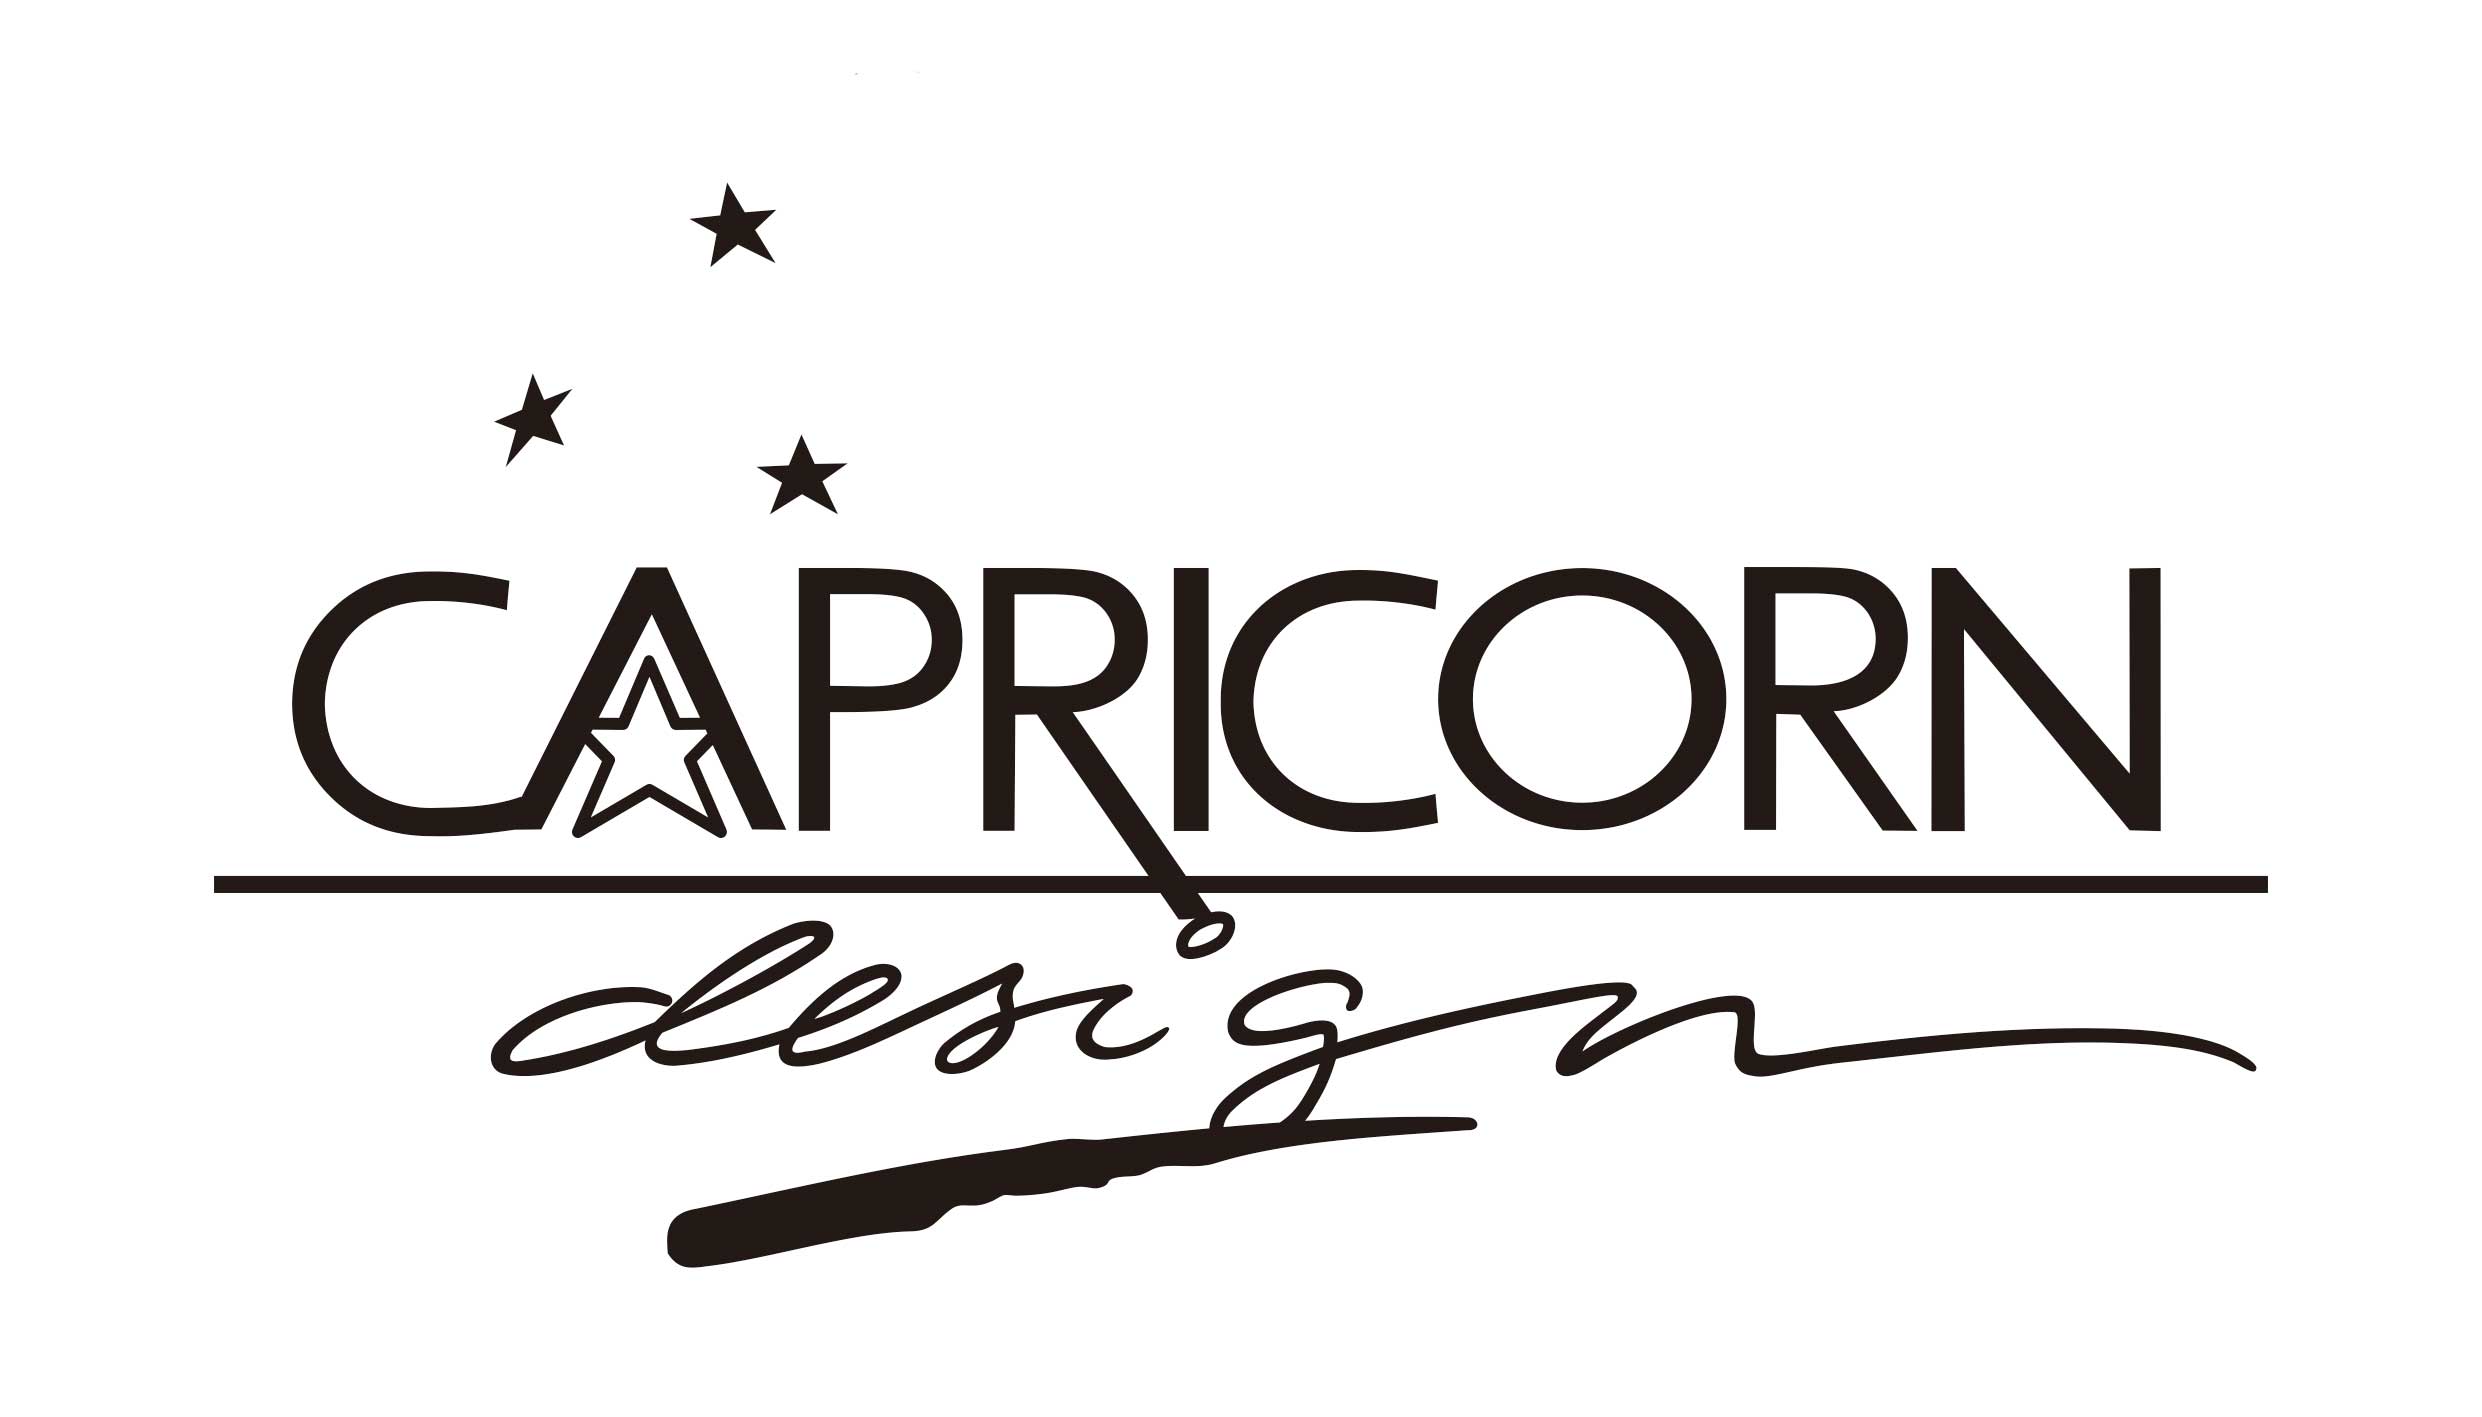 Capricorn Design Official Store